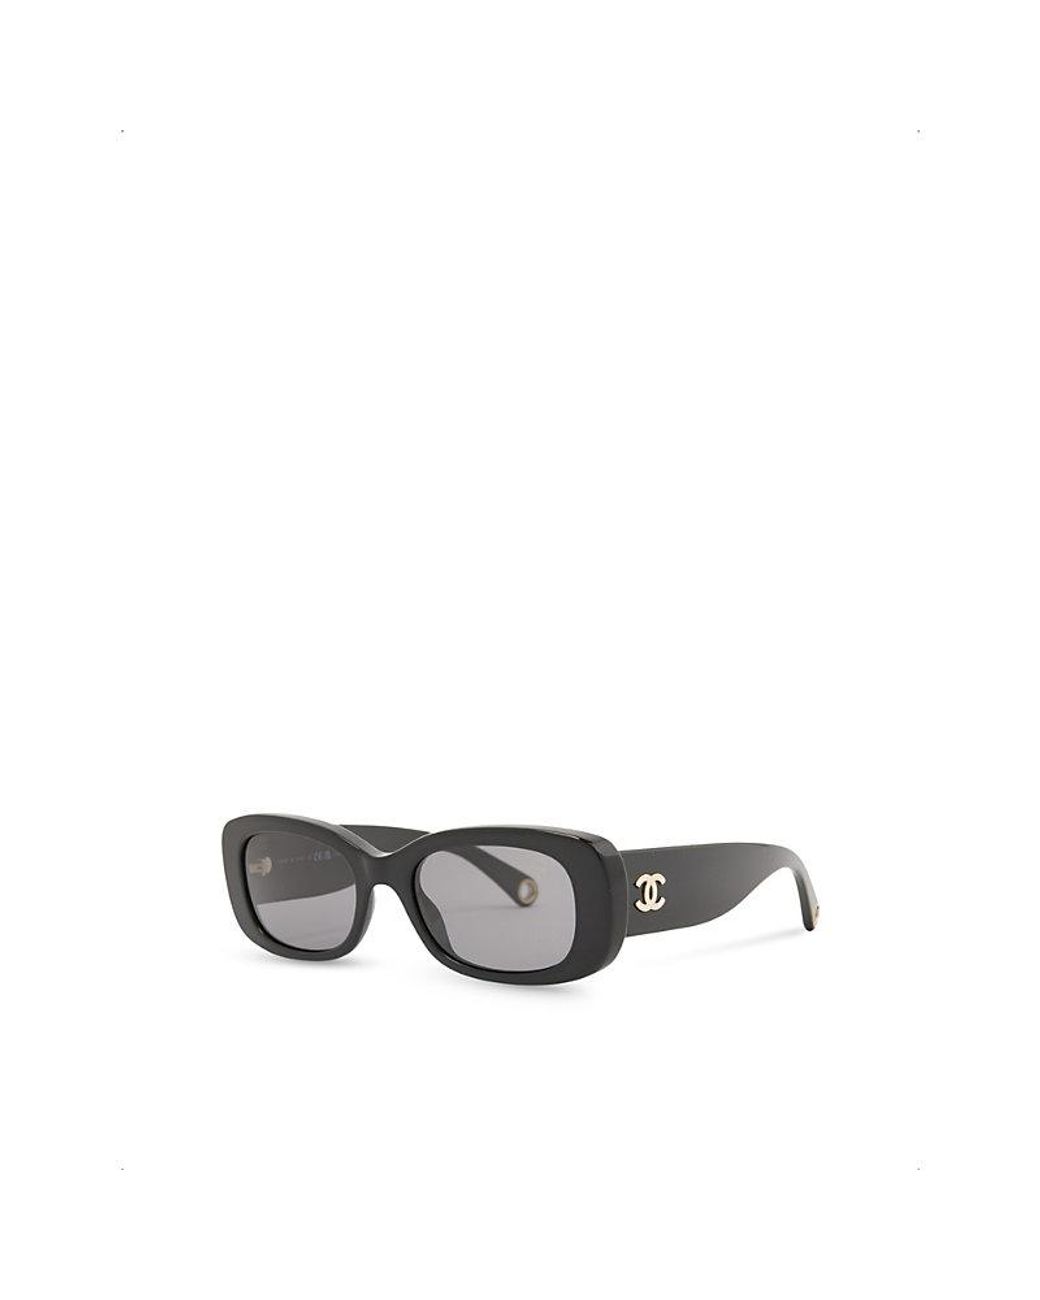 Chanel Rectangle Sunglasses in Gray